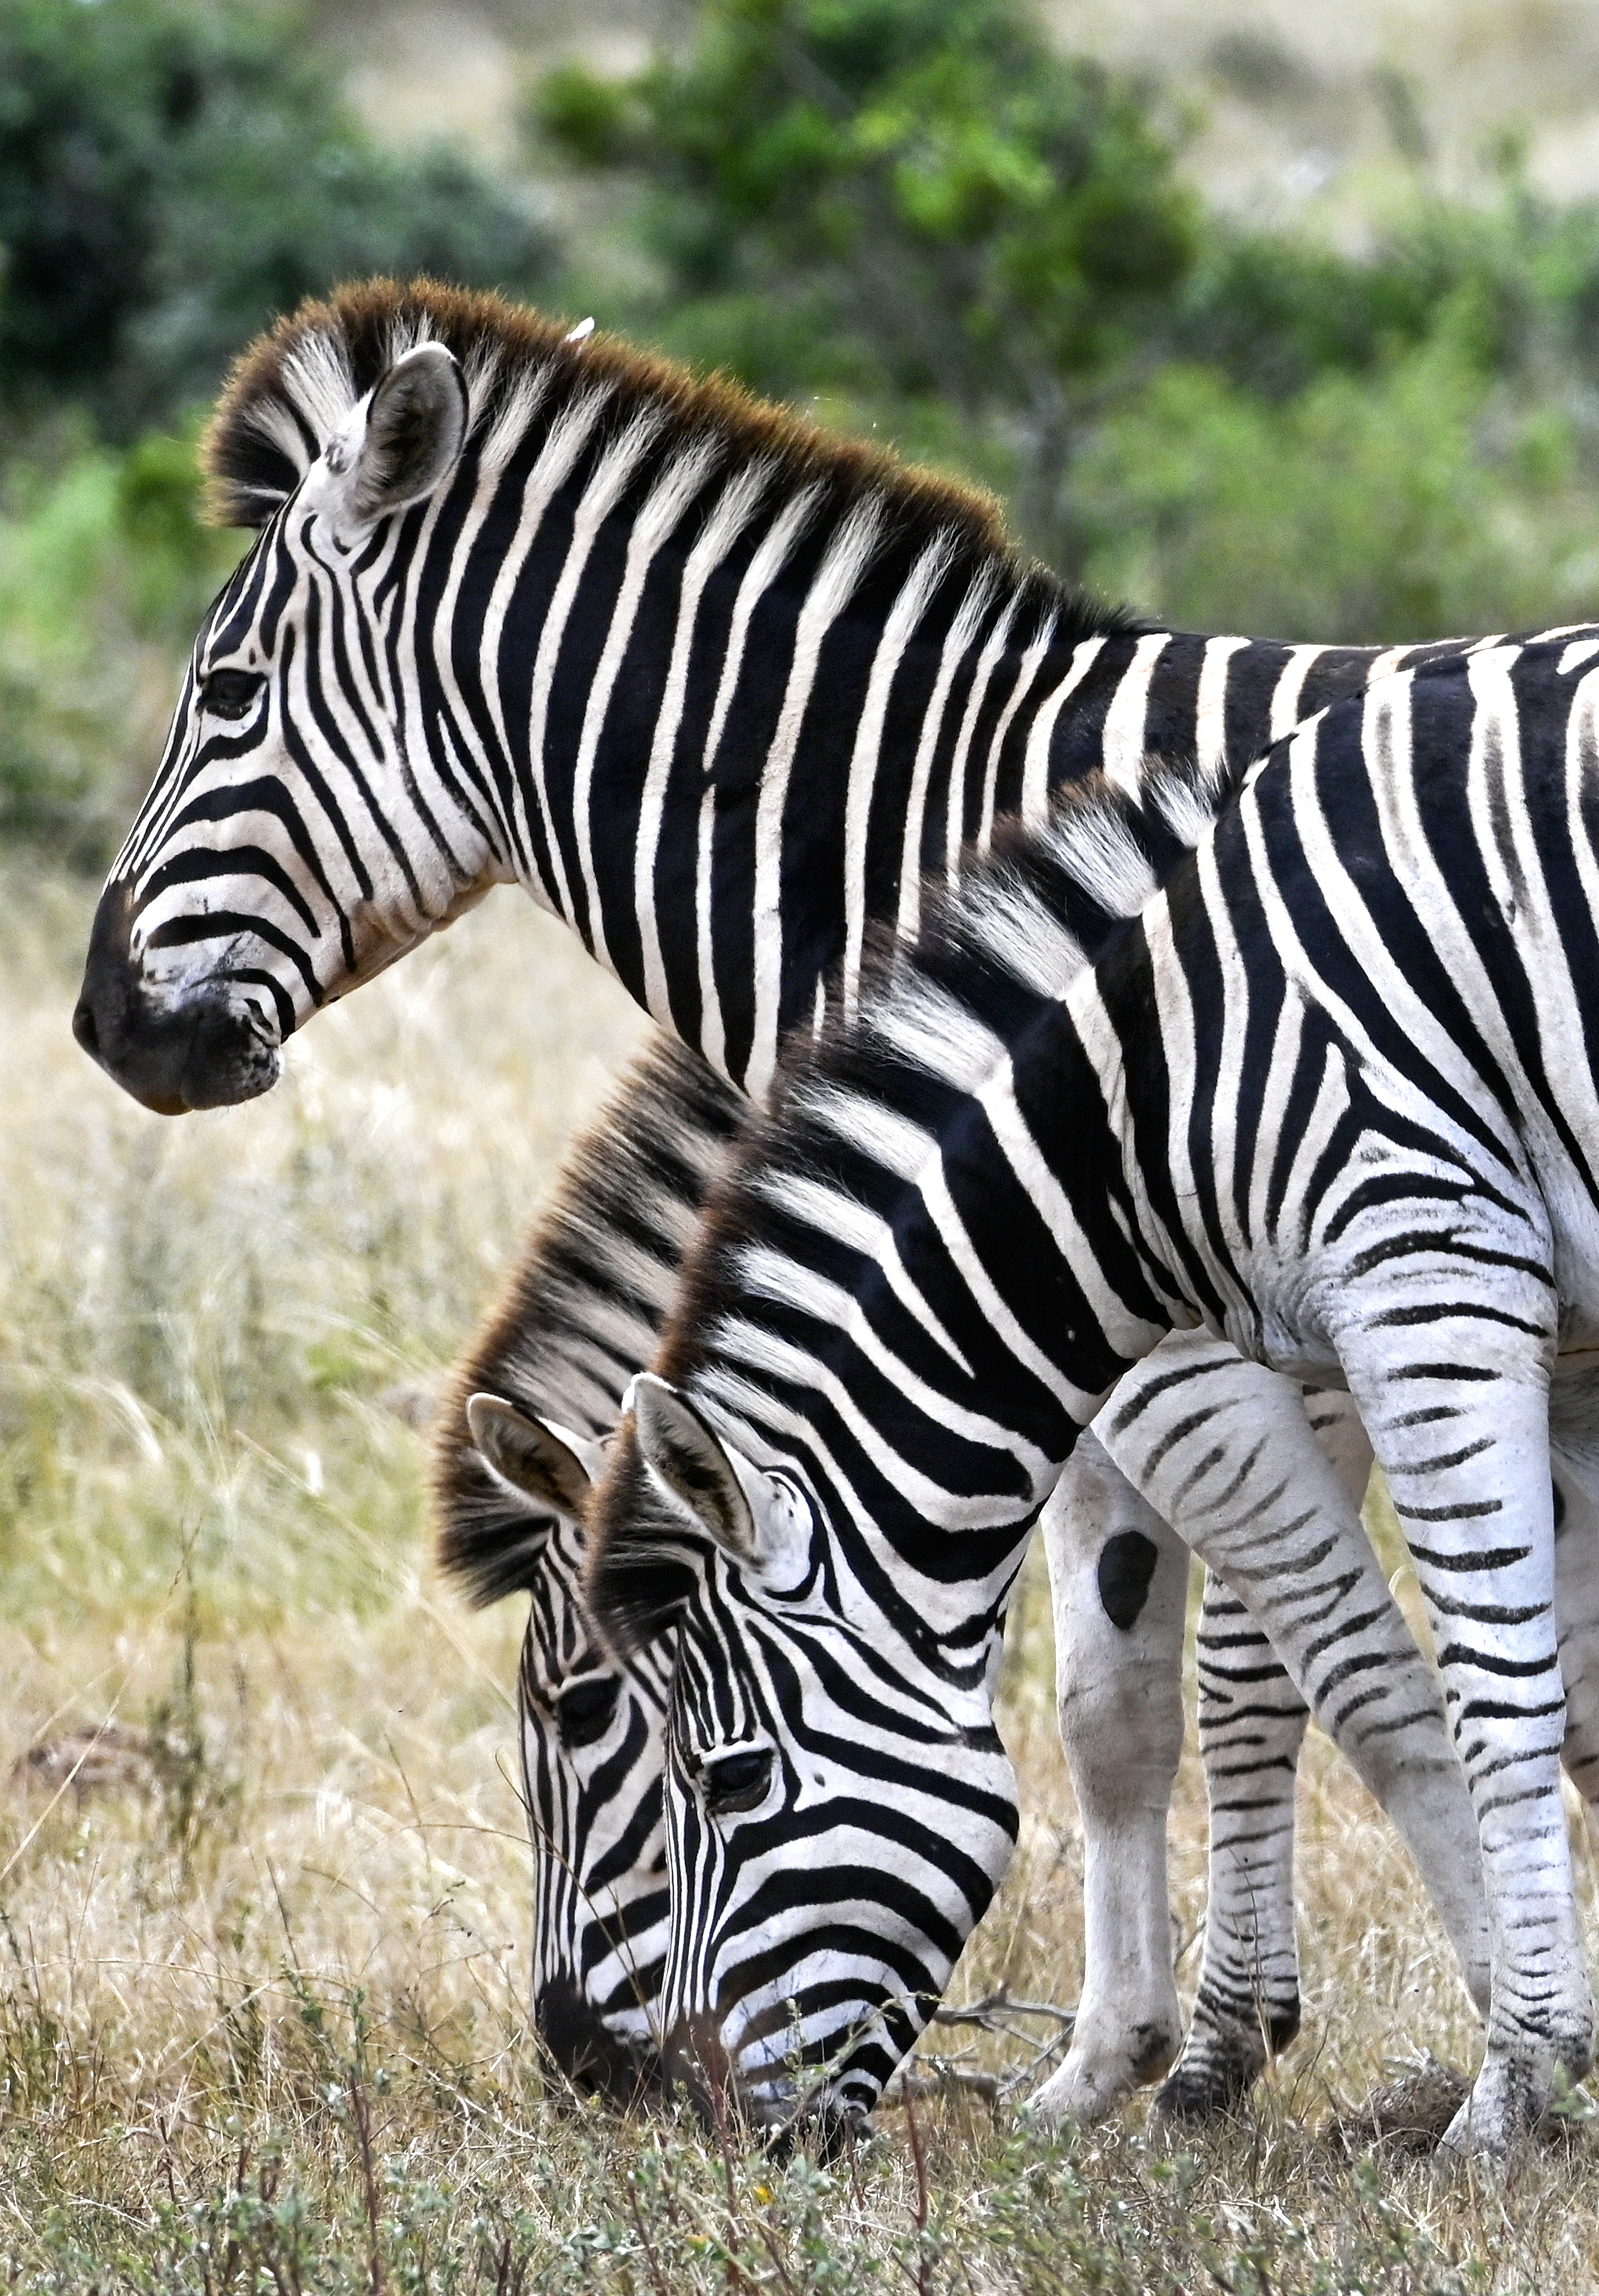 Zebras at the Ngulube waterhole at Addo Elephant National Park